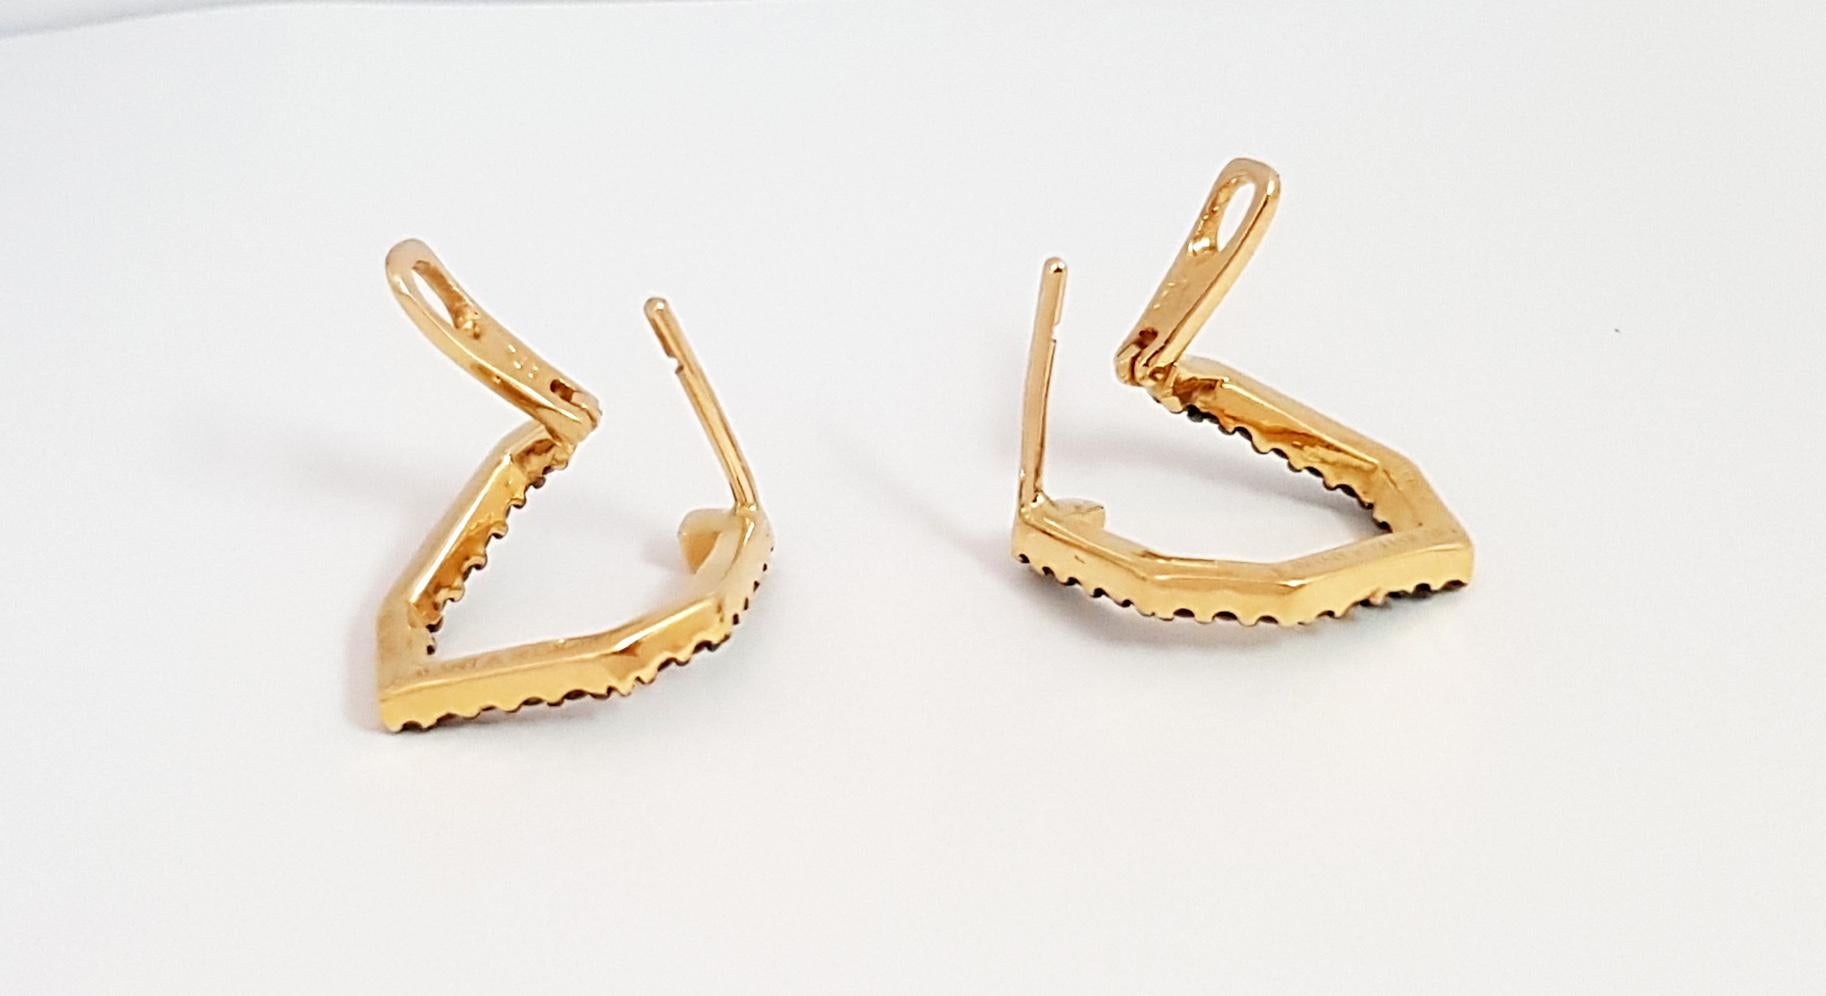 Brilliant Cut Origami Skinny Single Link No.5 Black Diamond Earrings 18K Yellow Gold For Sale